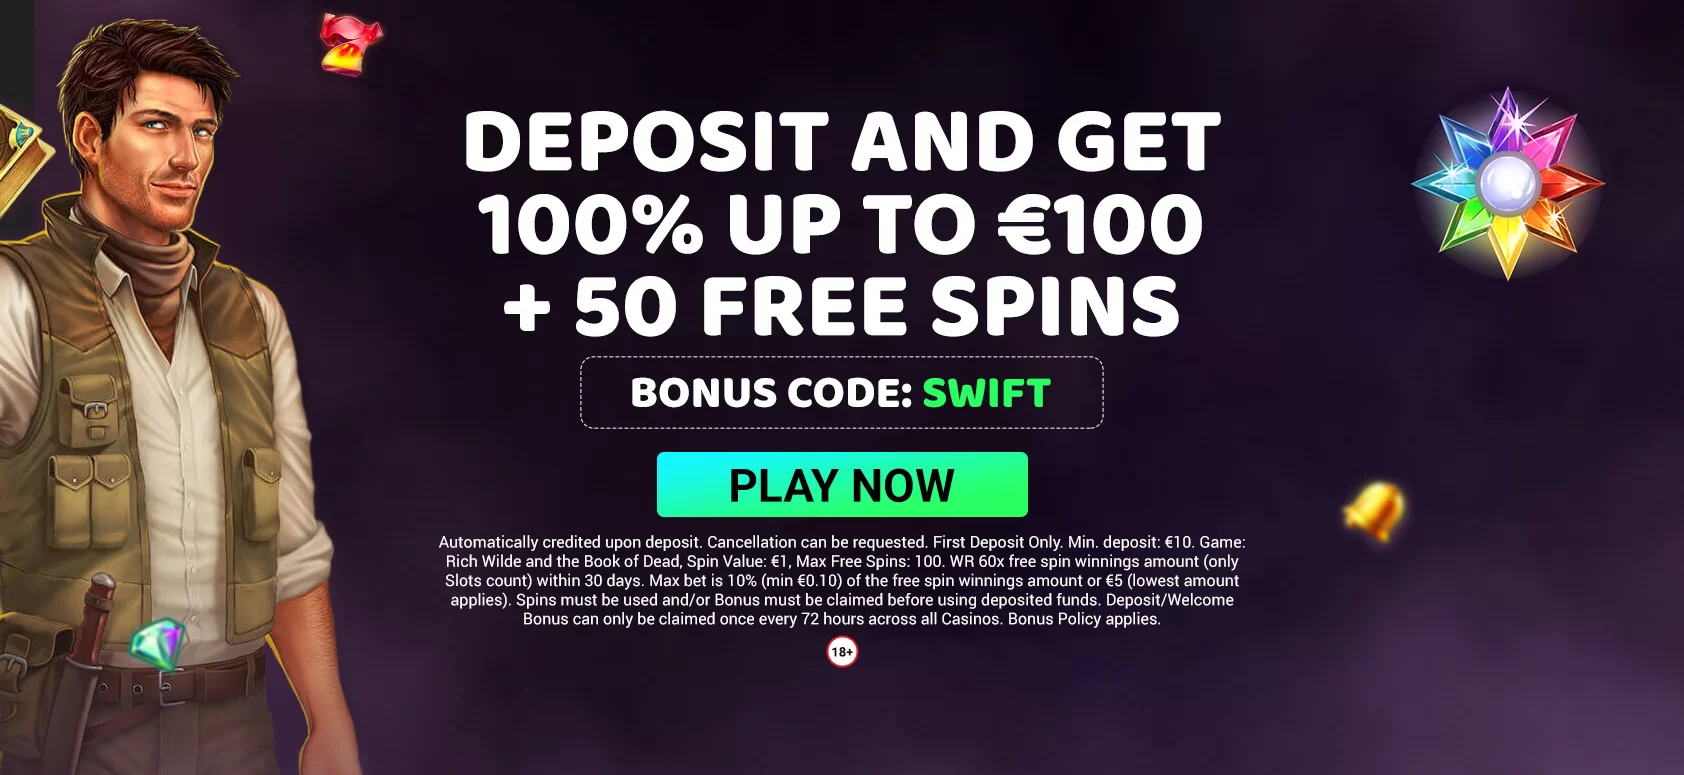 Swift Casino Welcome Bonus 100% up to €100 + 50 Free Spins